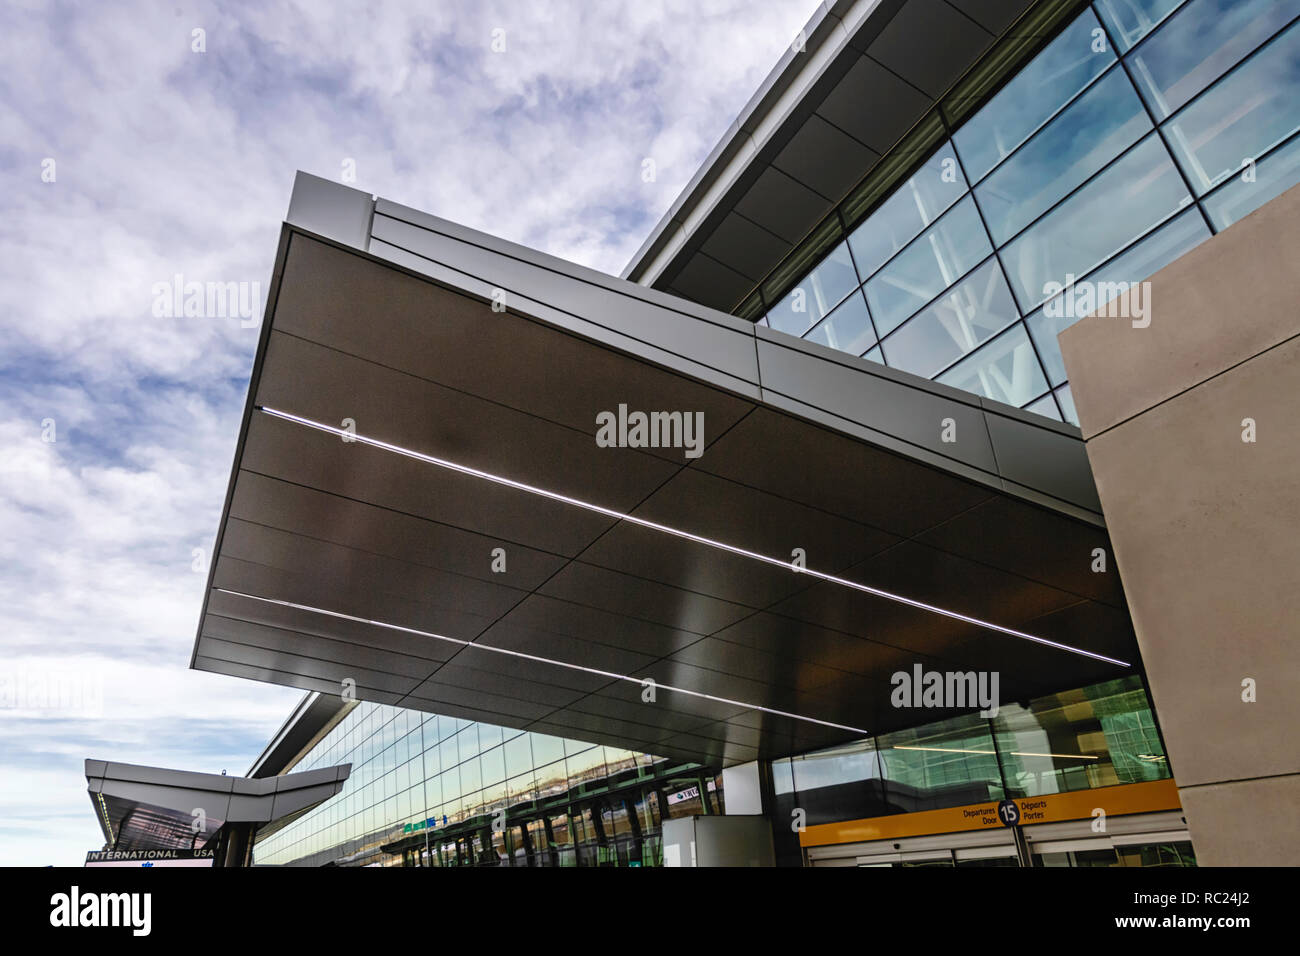 Die neuen internationalen Flughafen Calgary (YYC) Abflugebene Stockfoto